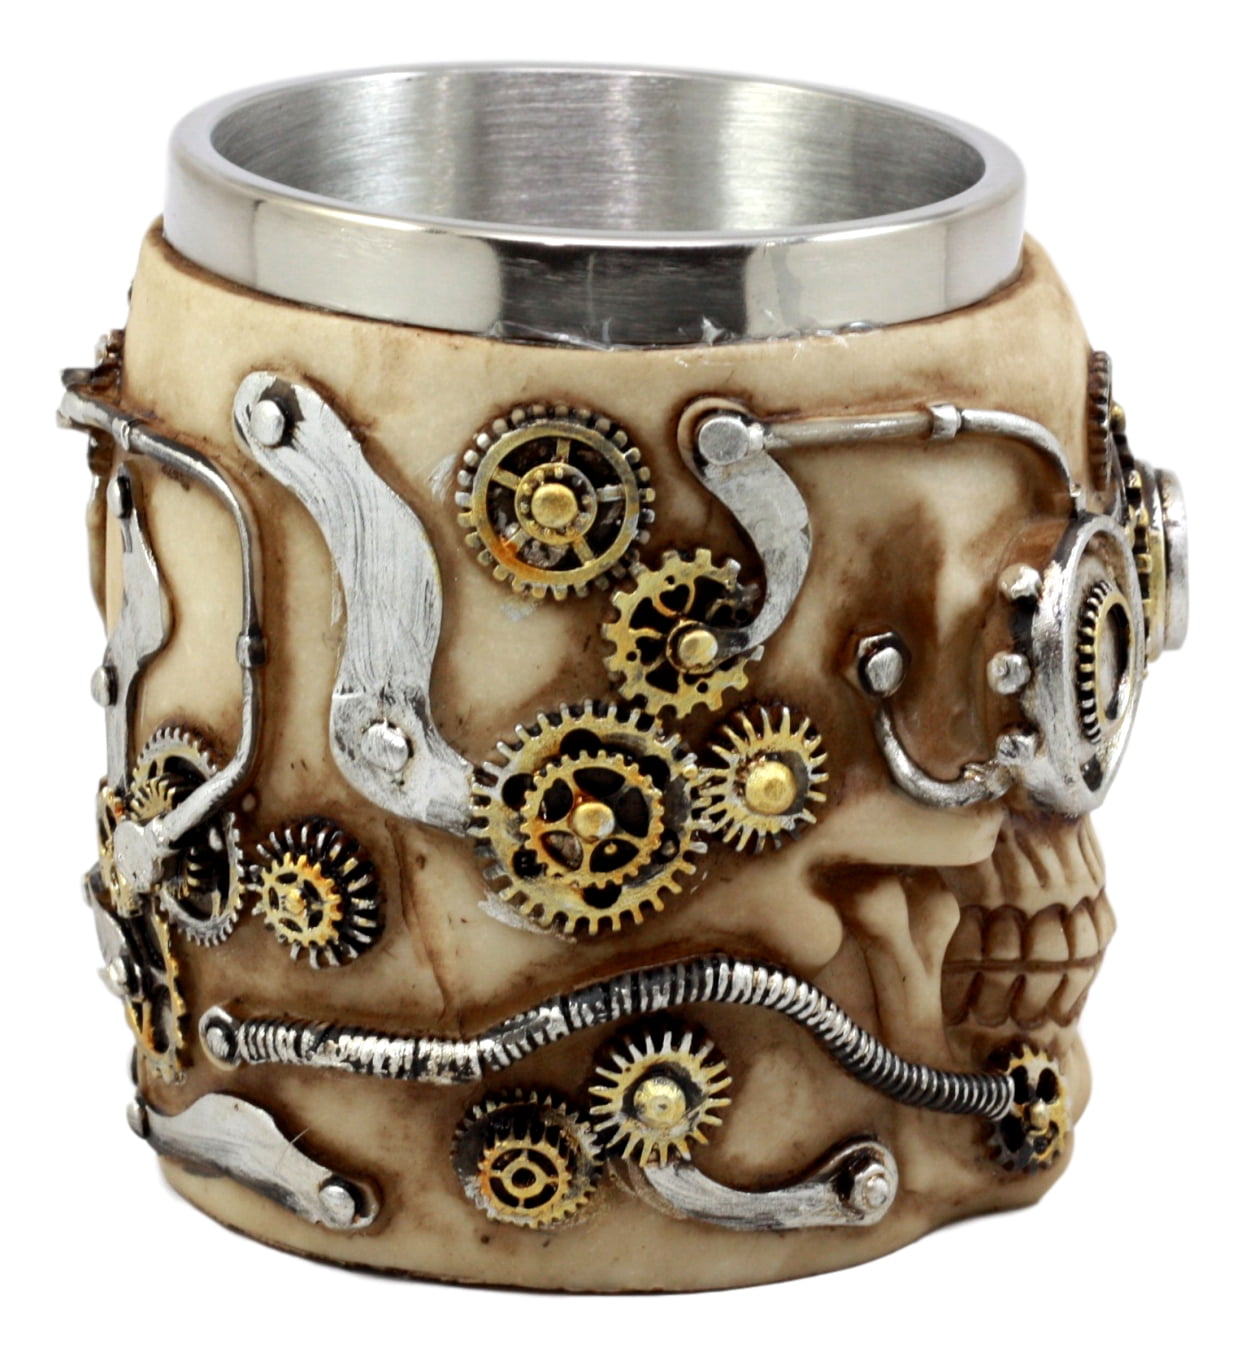 Pacific Giftware Steampunk Gear Head Skull Mug Gothic Tankard 11oz Beer Mug Drinking Vessel 